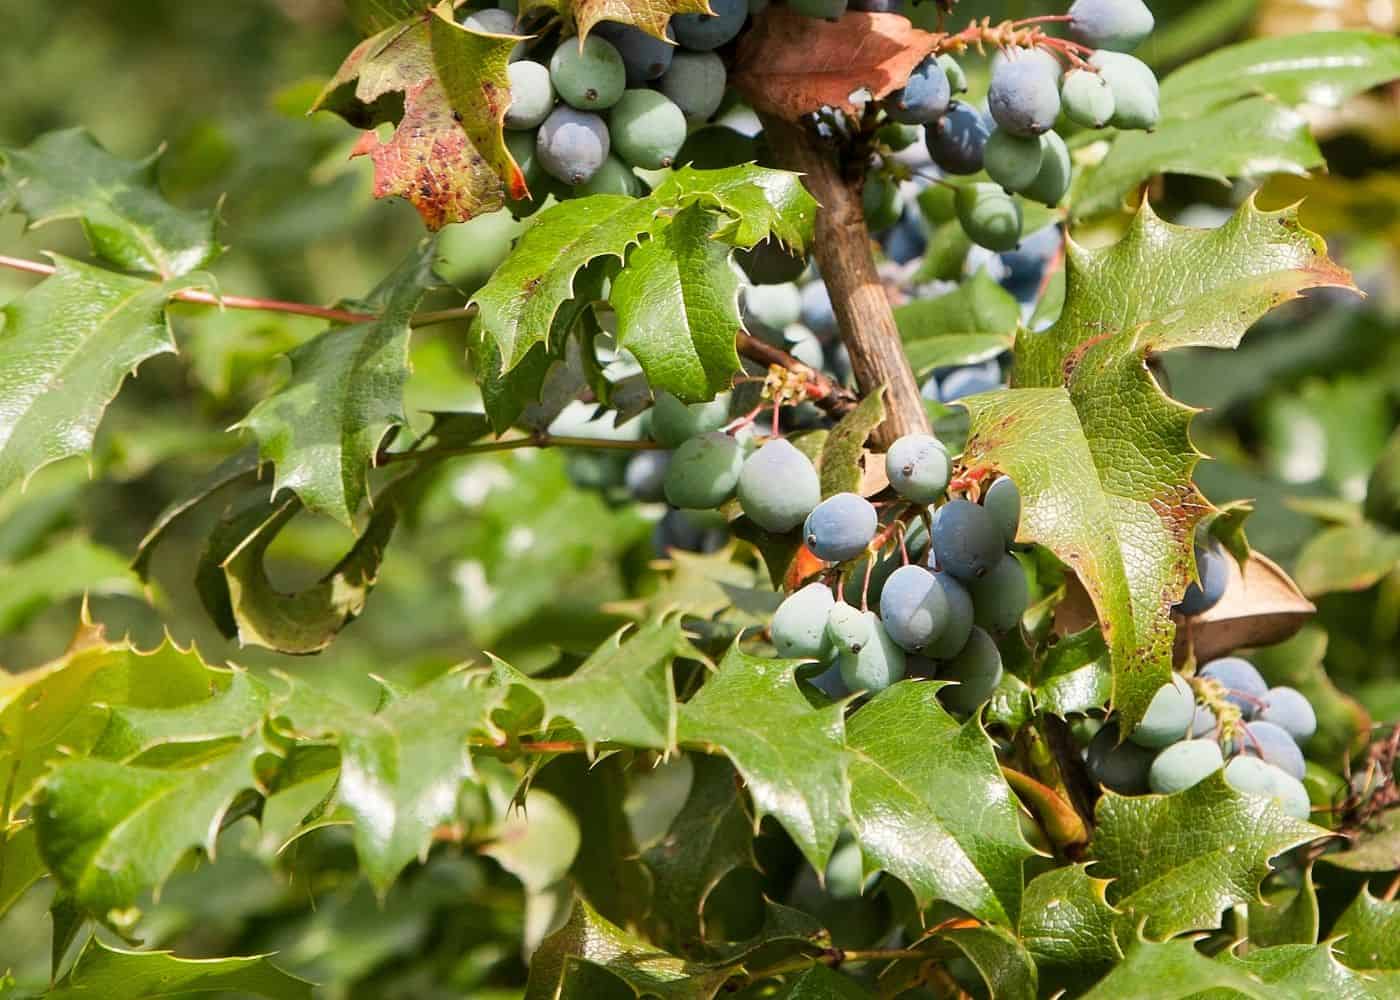 Oregon grape holly (berberis aquifolium)